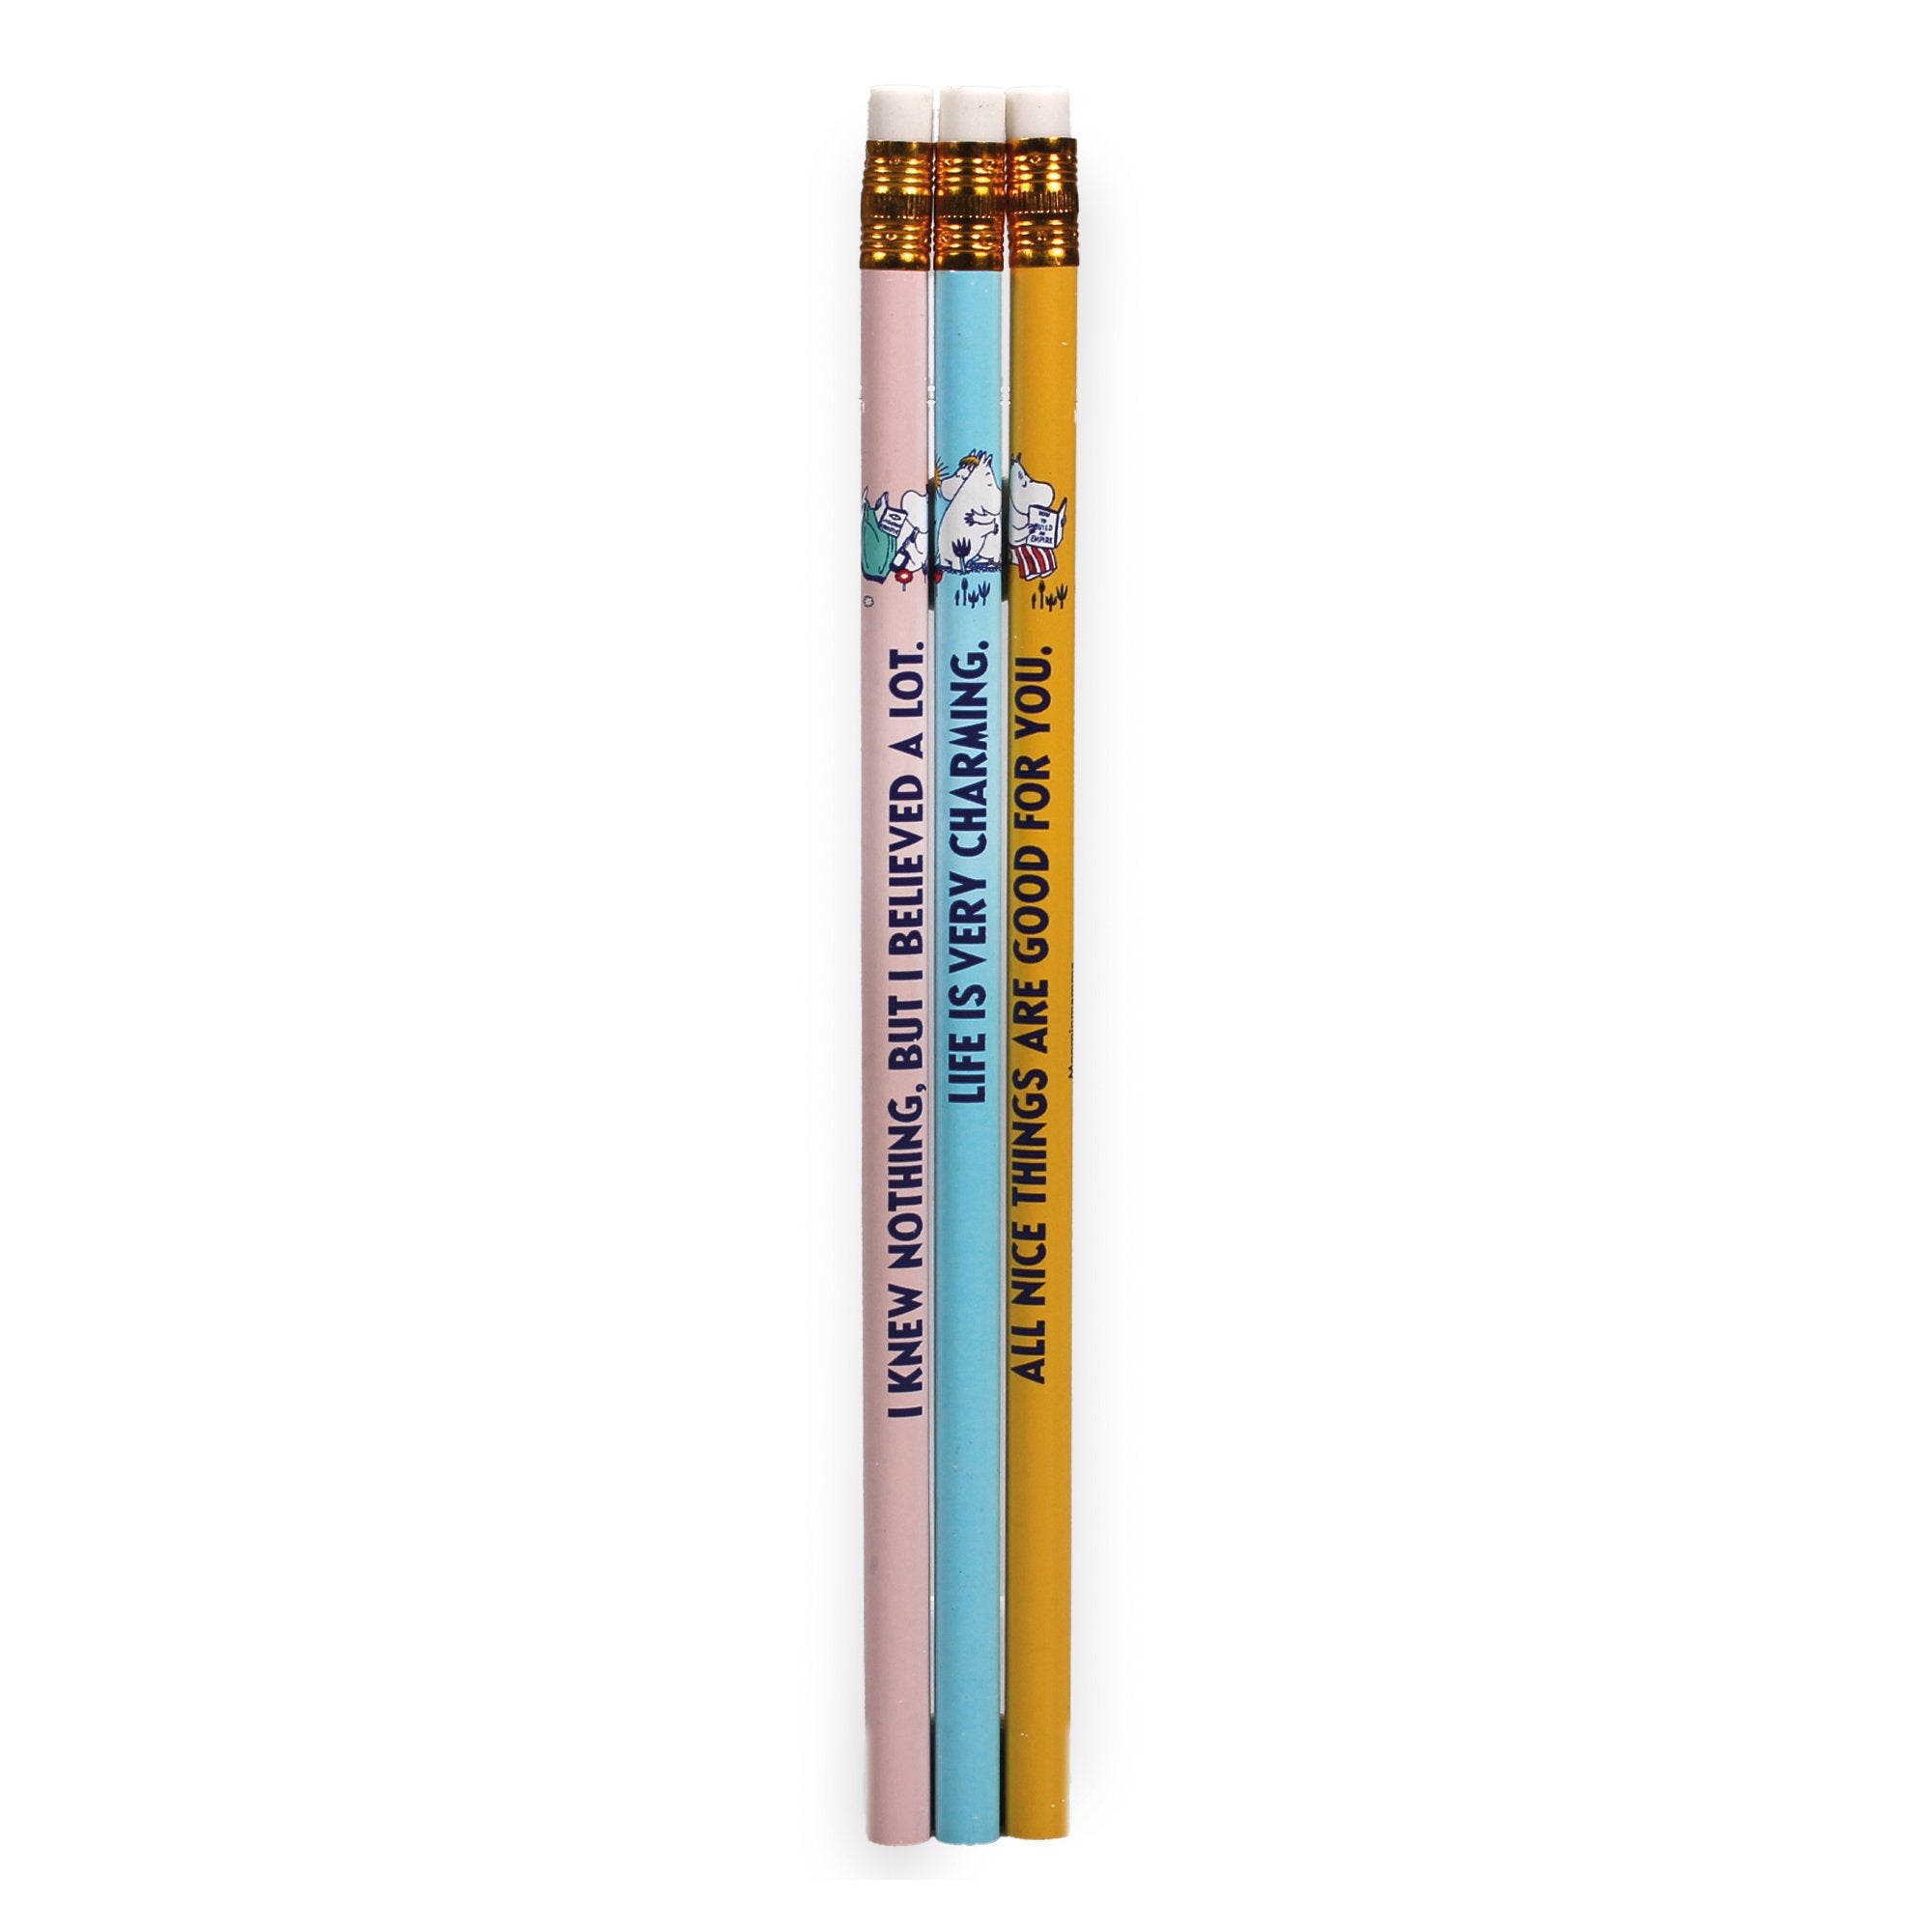 Pencils Set of 3 Boxed - Moomin